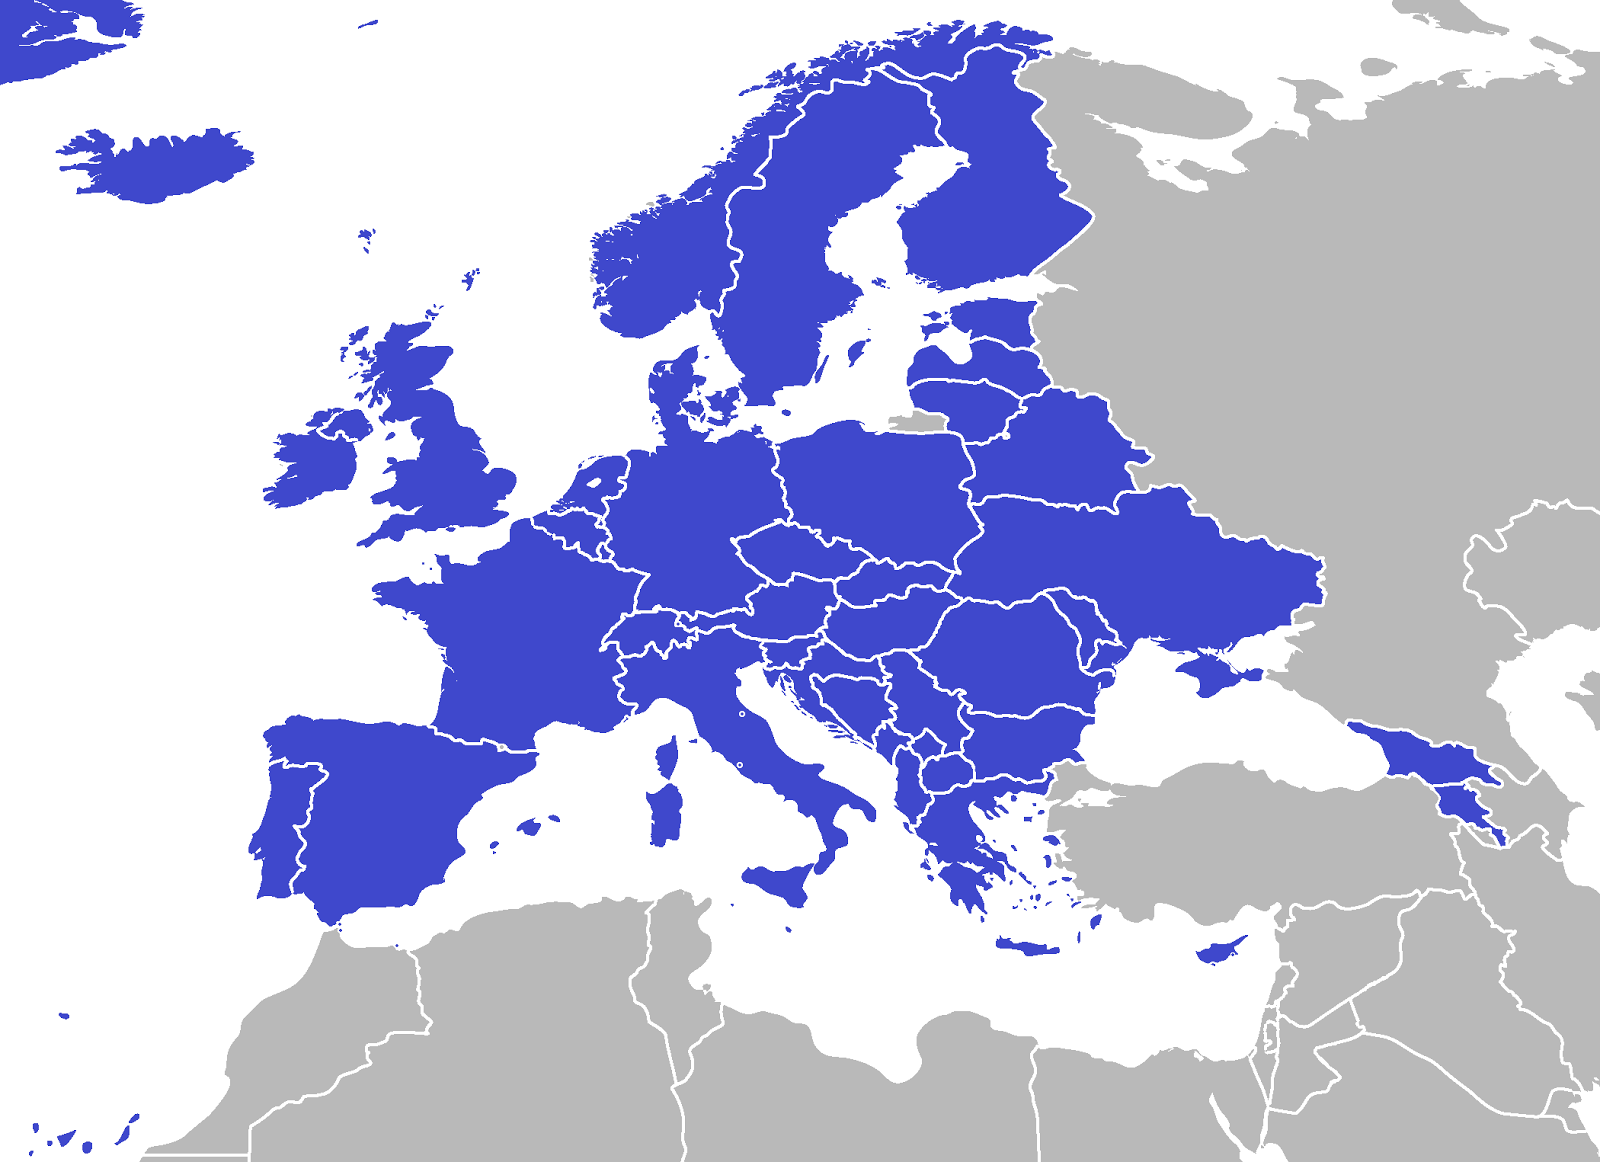 European Federation